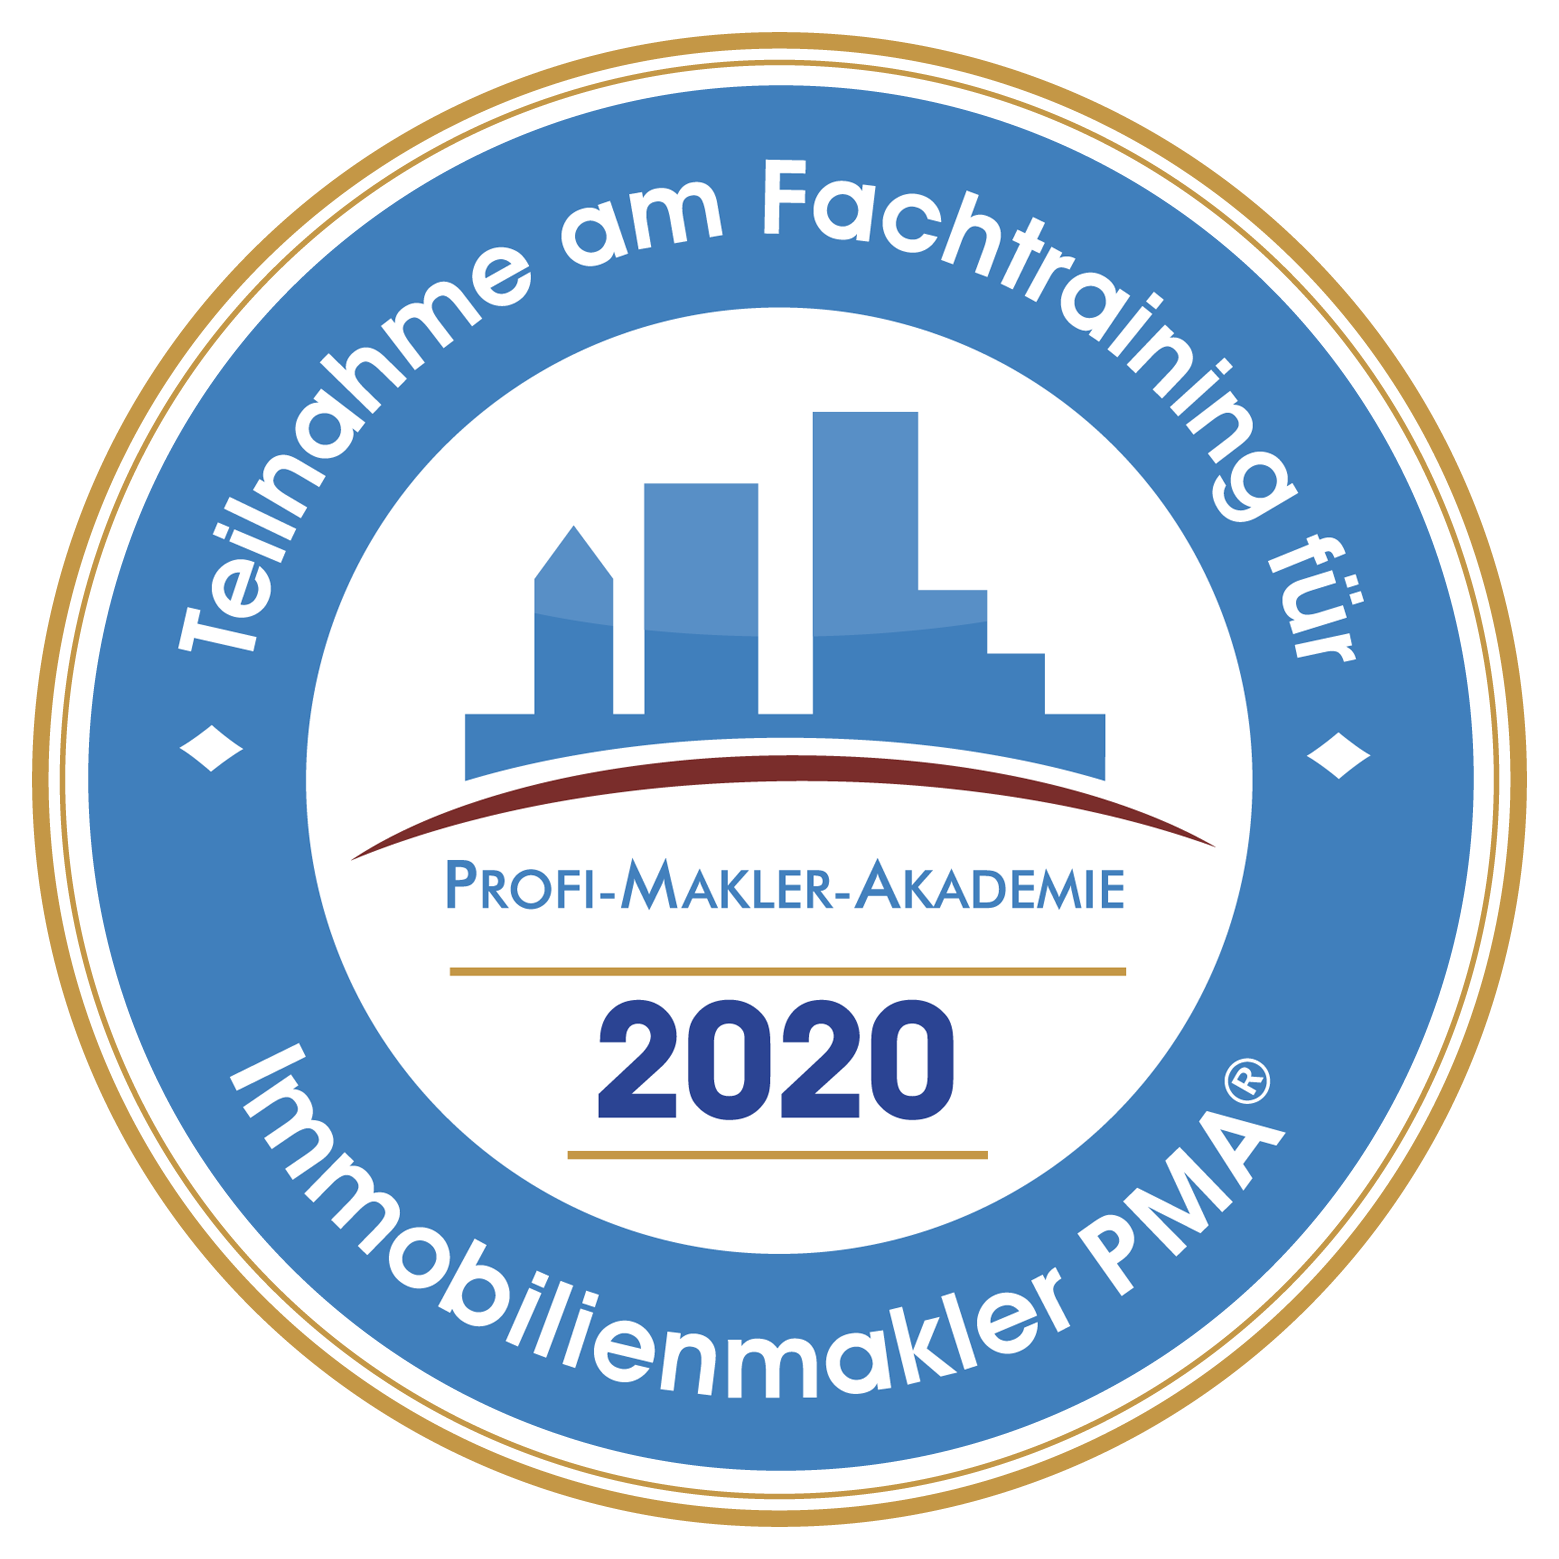 //patrickhasch.de/casa/wp-content/uploads/2020/10/Emblem-2020-PMA®-Fachtraining-für-Immobilienmakler-gross-transparent.png